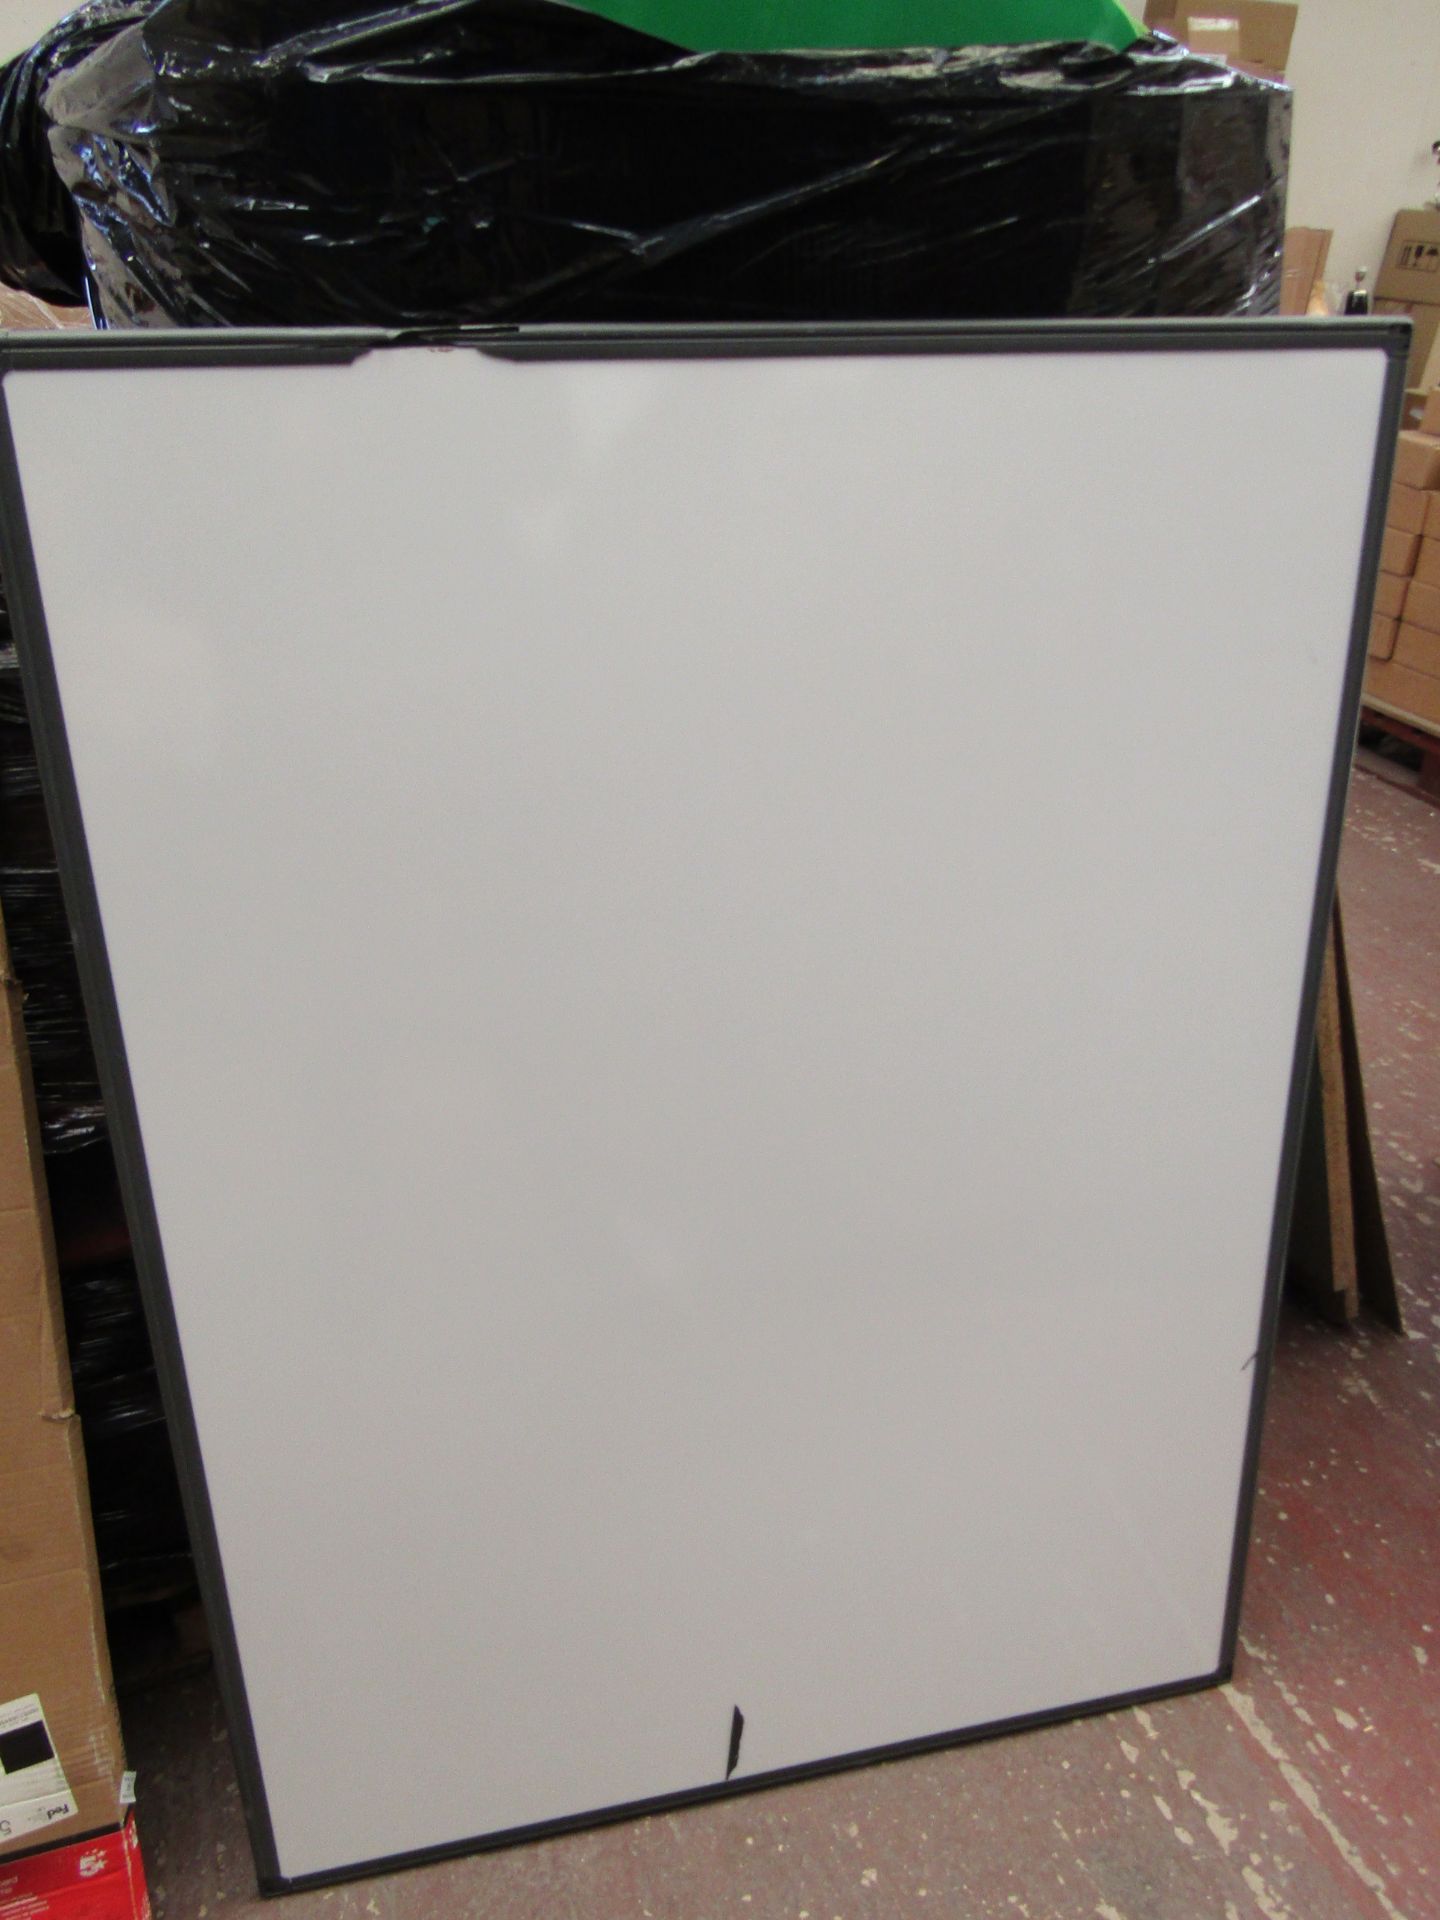 5 Star drywipe board with plastic frame, 1200 x 900 mm.